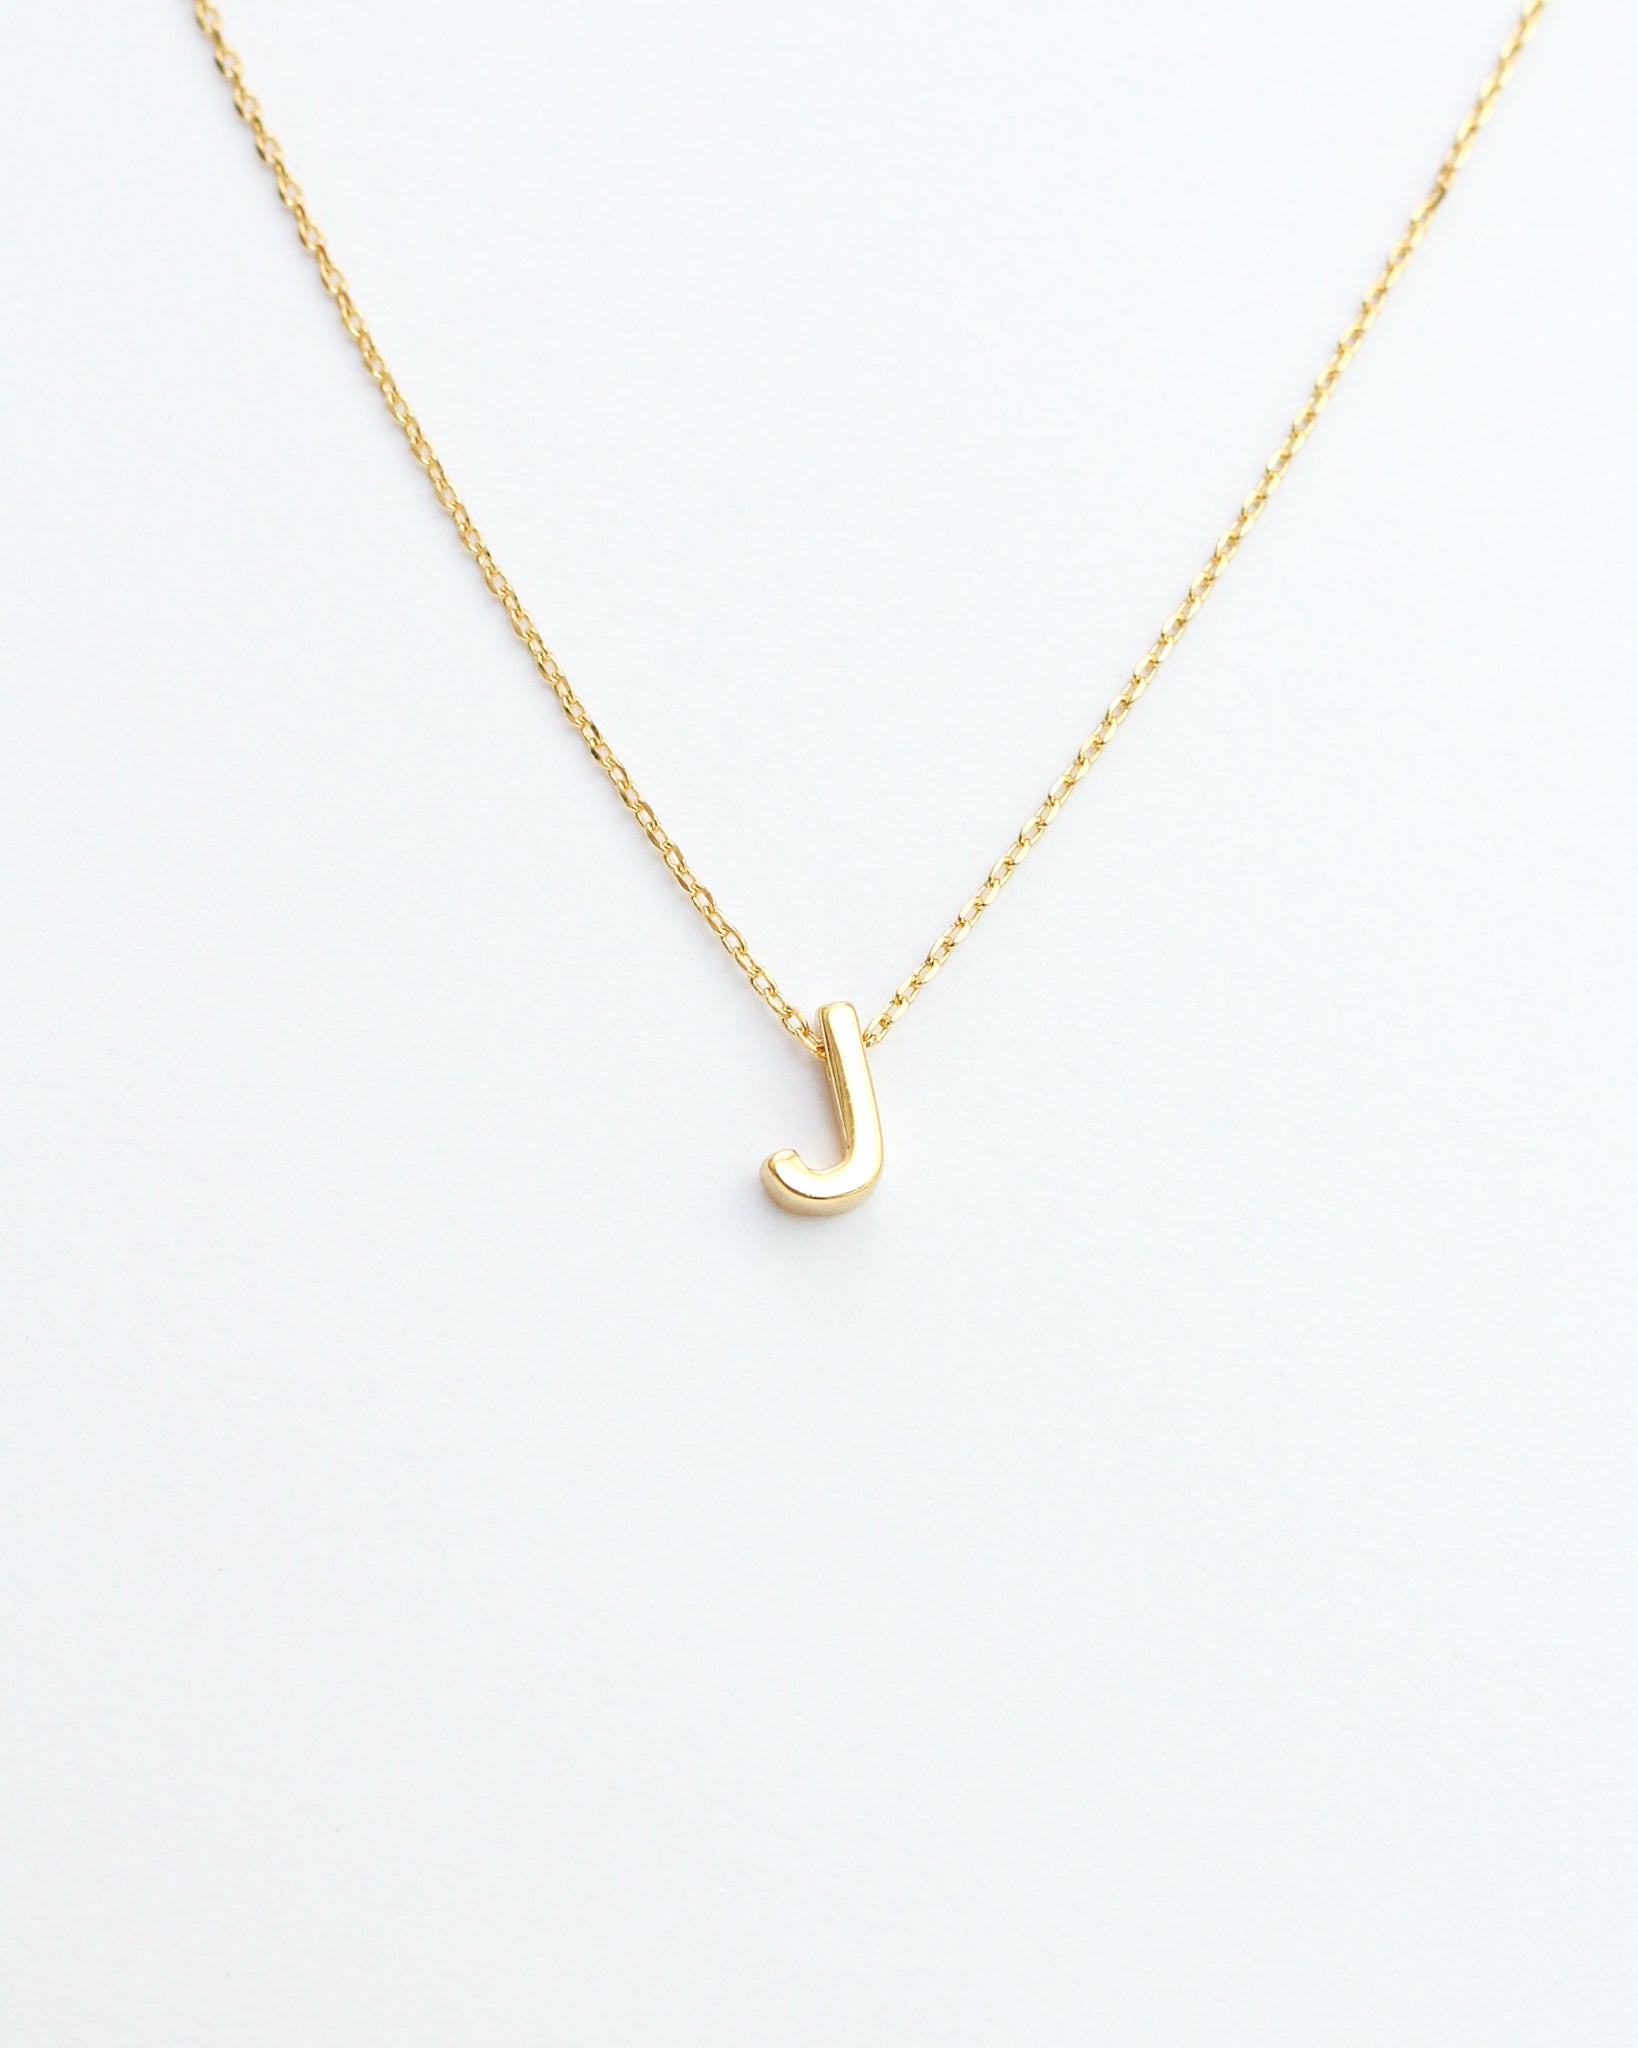 Gold Initial Letter Block Necklace. Letter J necklace